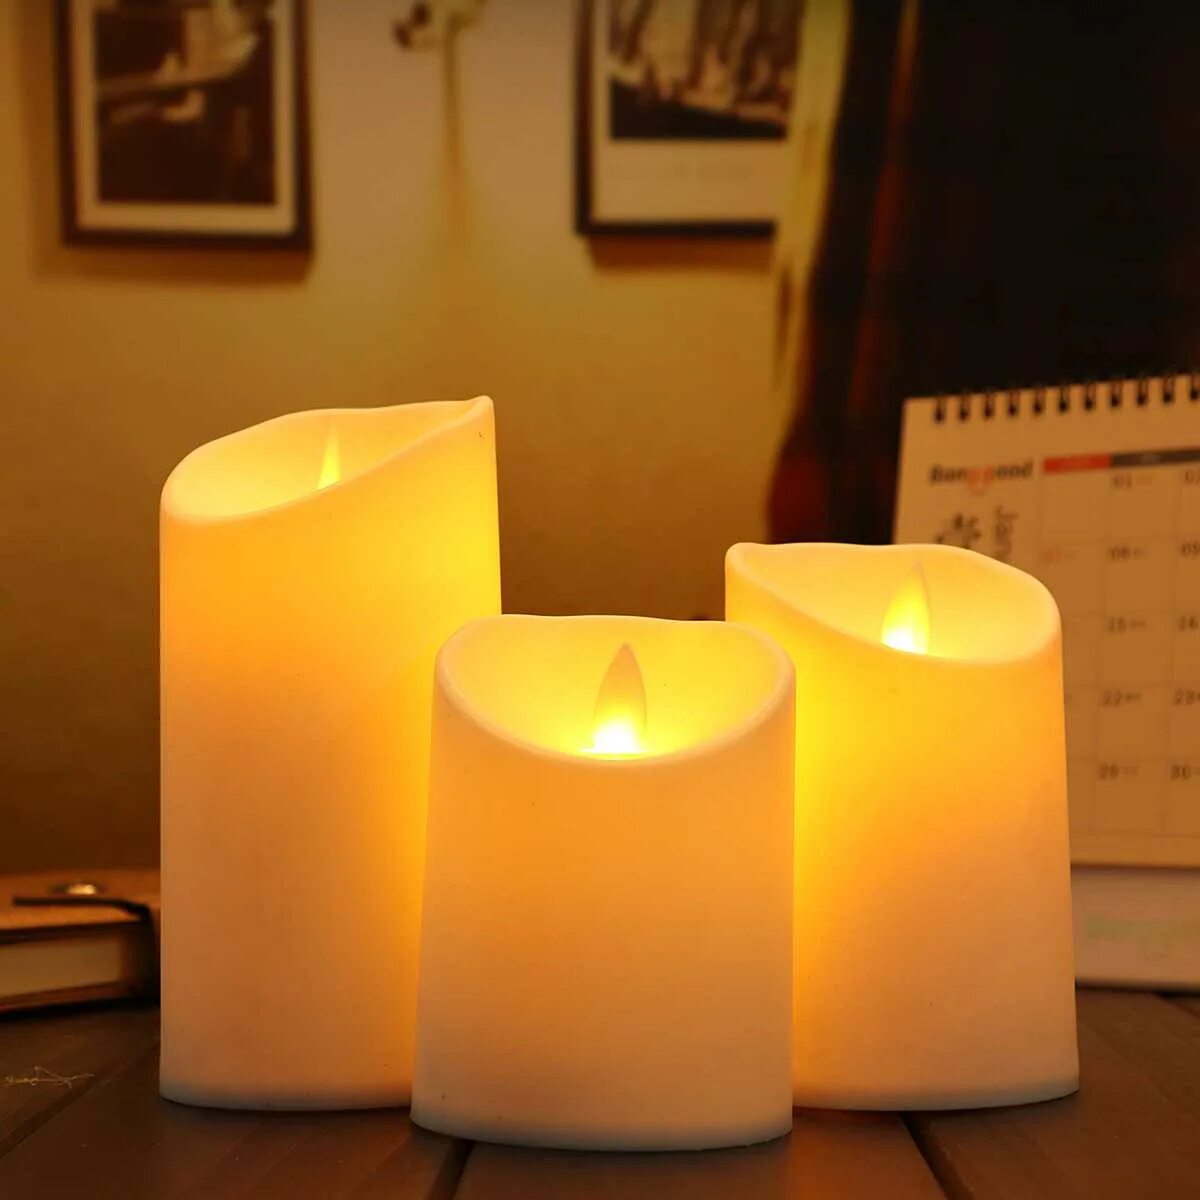 Имитация свечи. Светильники имитирующие свечи. Лампа имитация свечи. Лампы имитирующие свечи в подсвечниках.